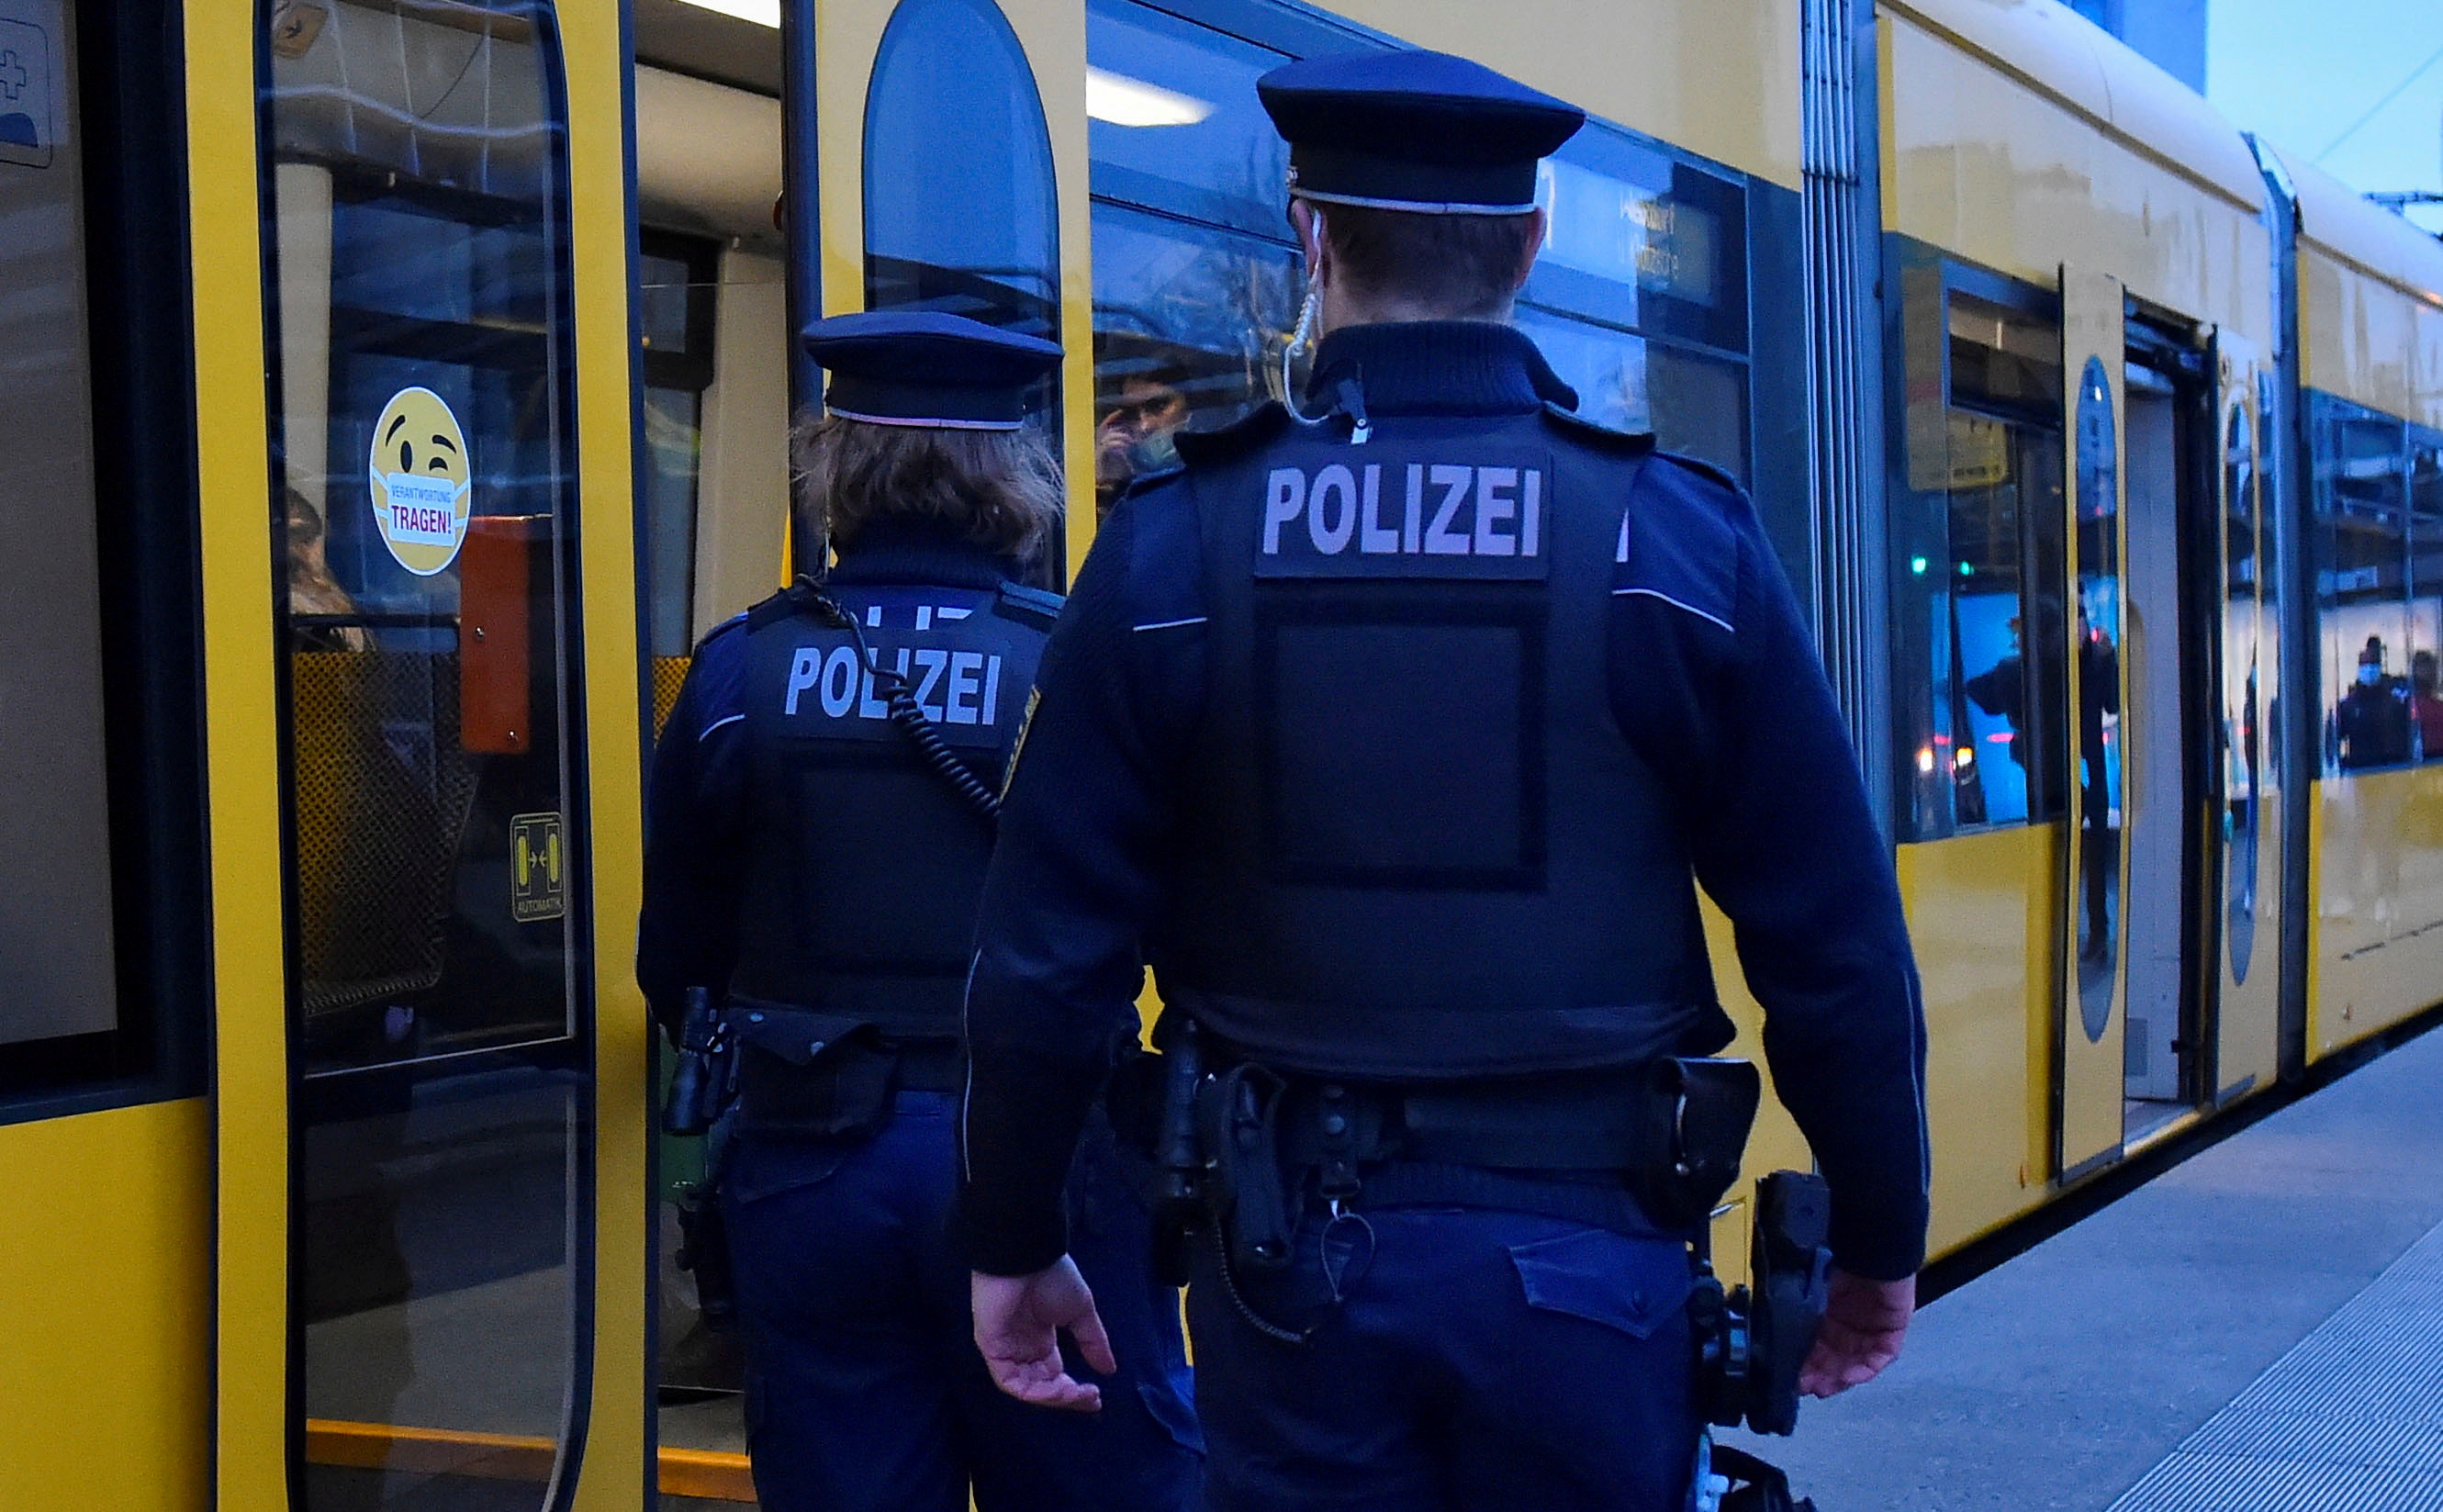 Police check COVID-19 measures in Dresden